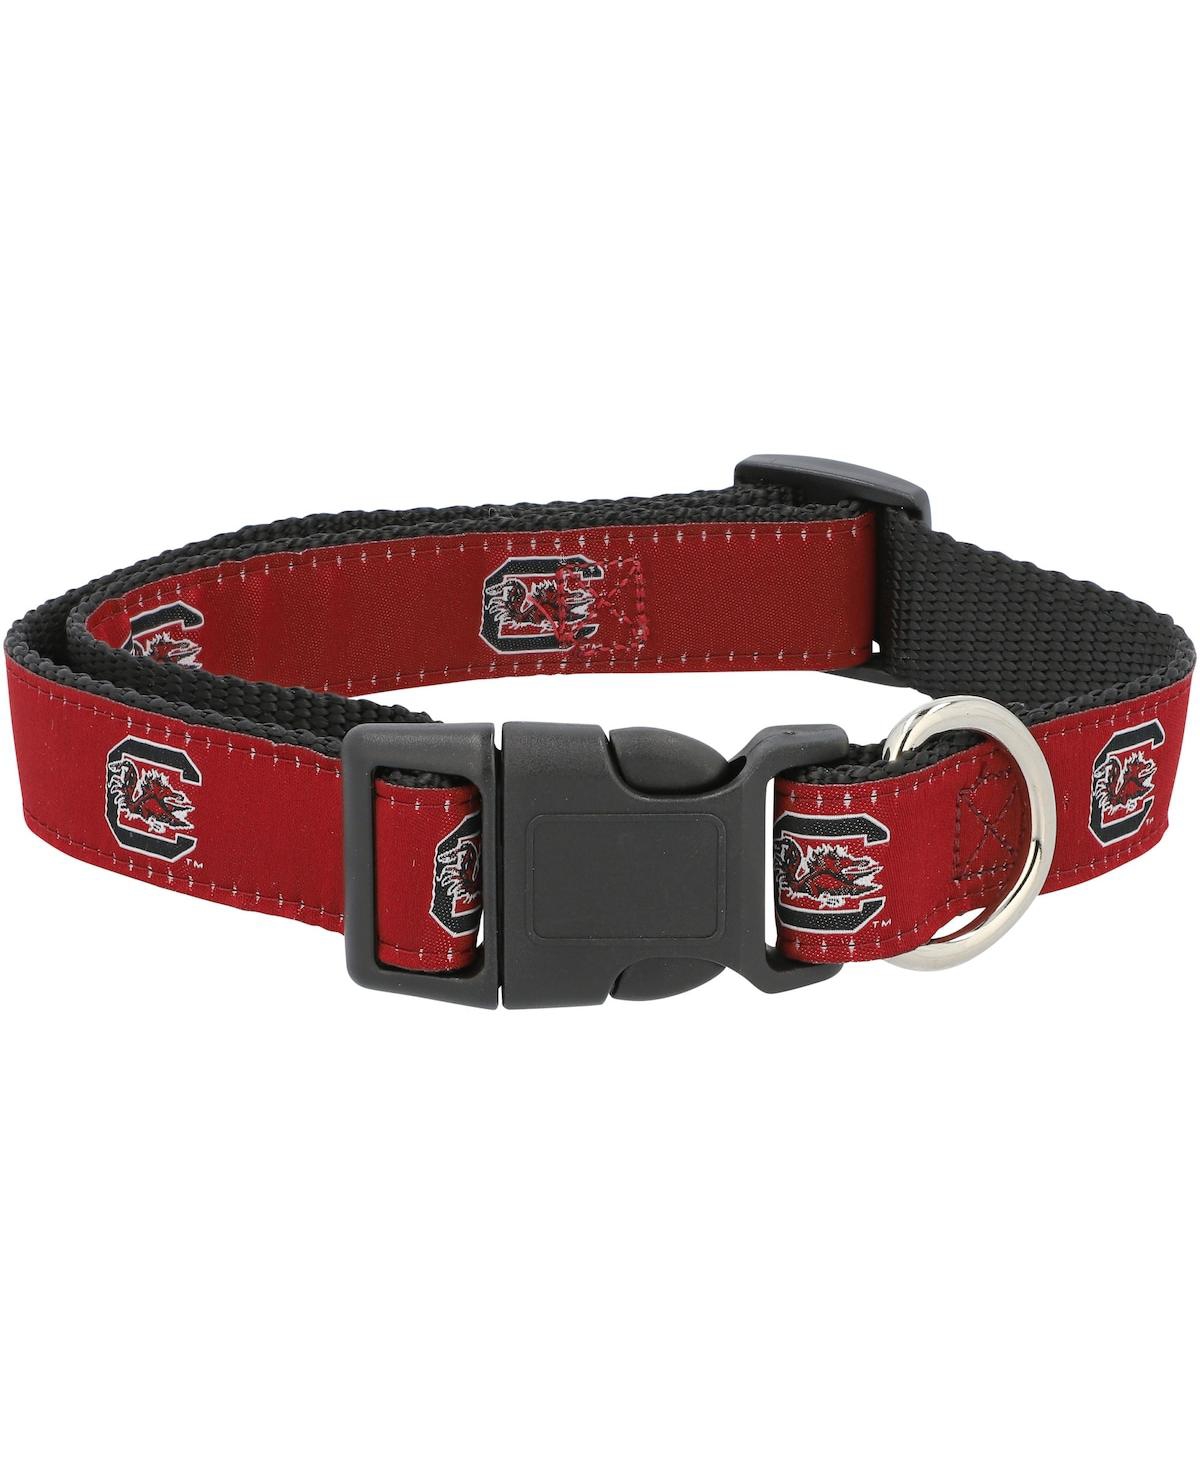 South Carolina Gamecocks 1" Regular Dog Collar - Red